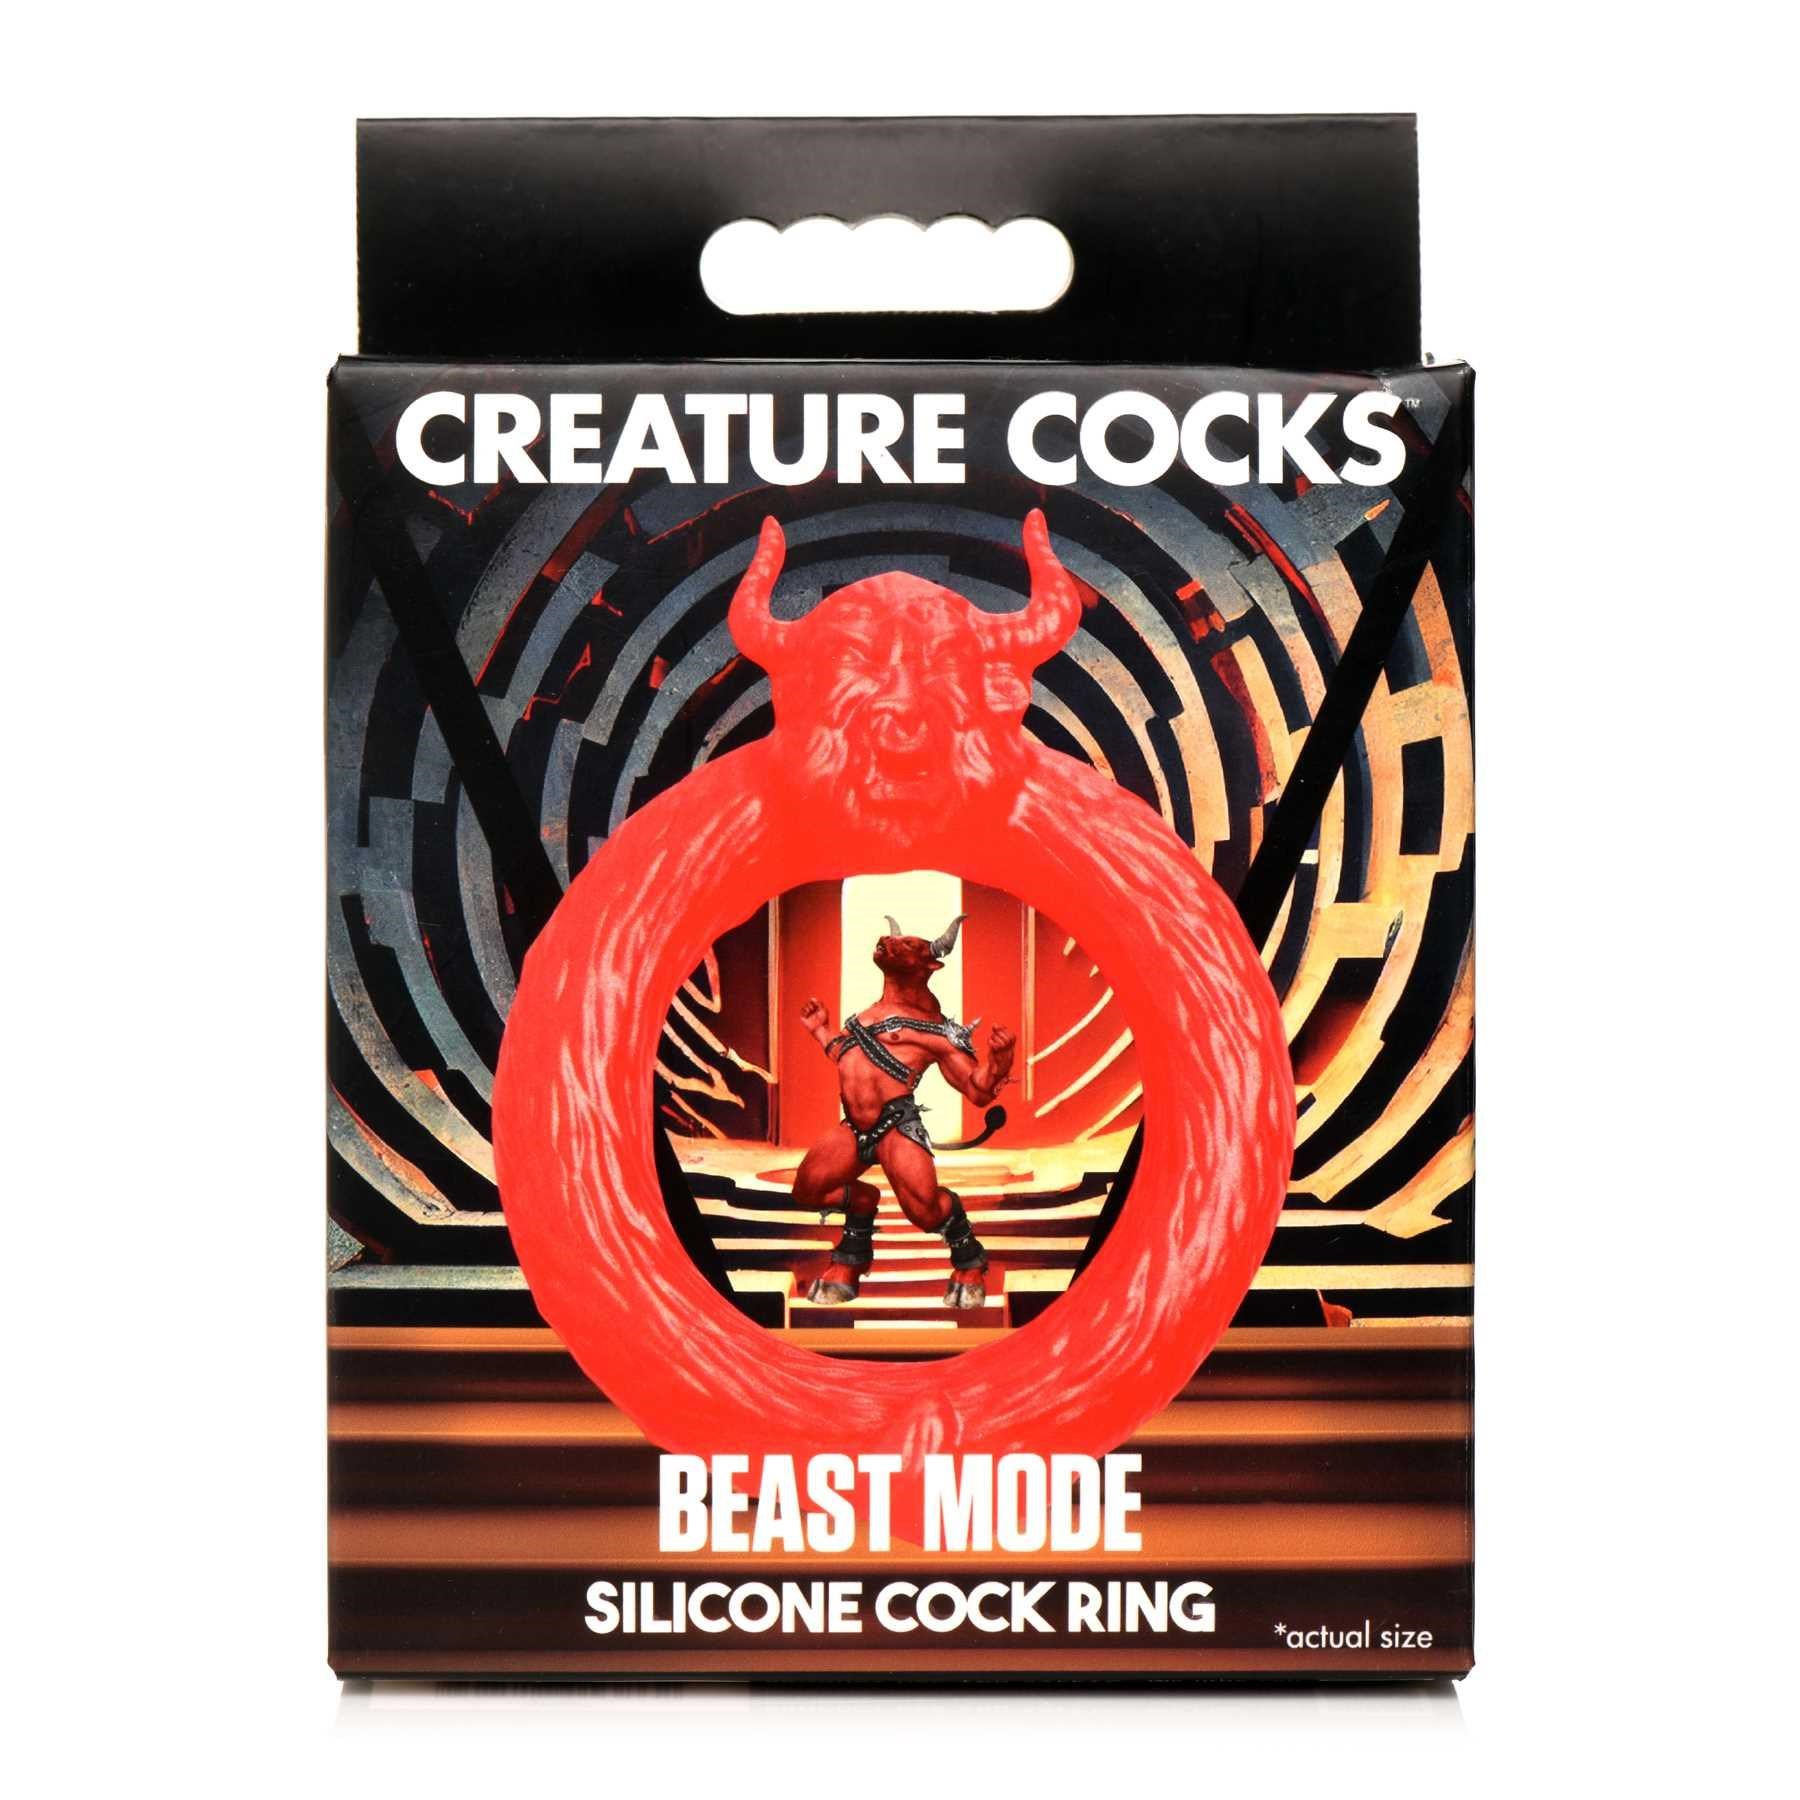 Creature Cocks Minotaur Silicone Cock Ring box